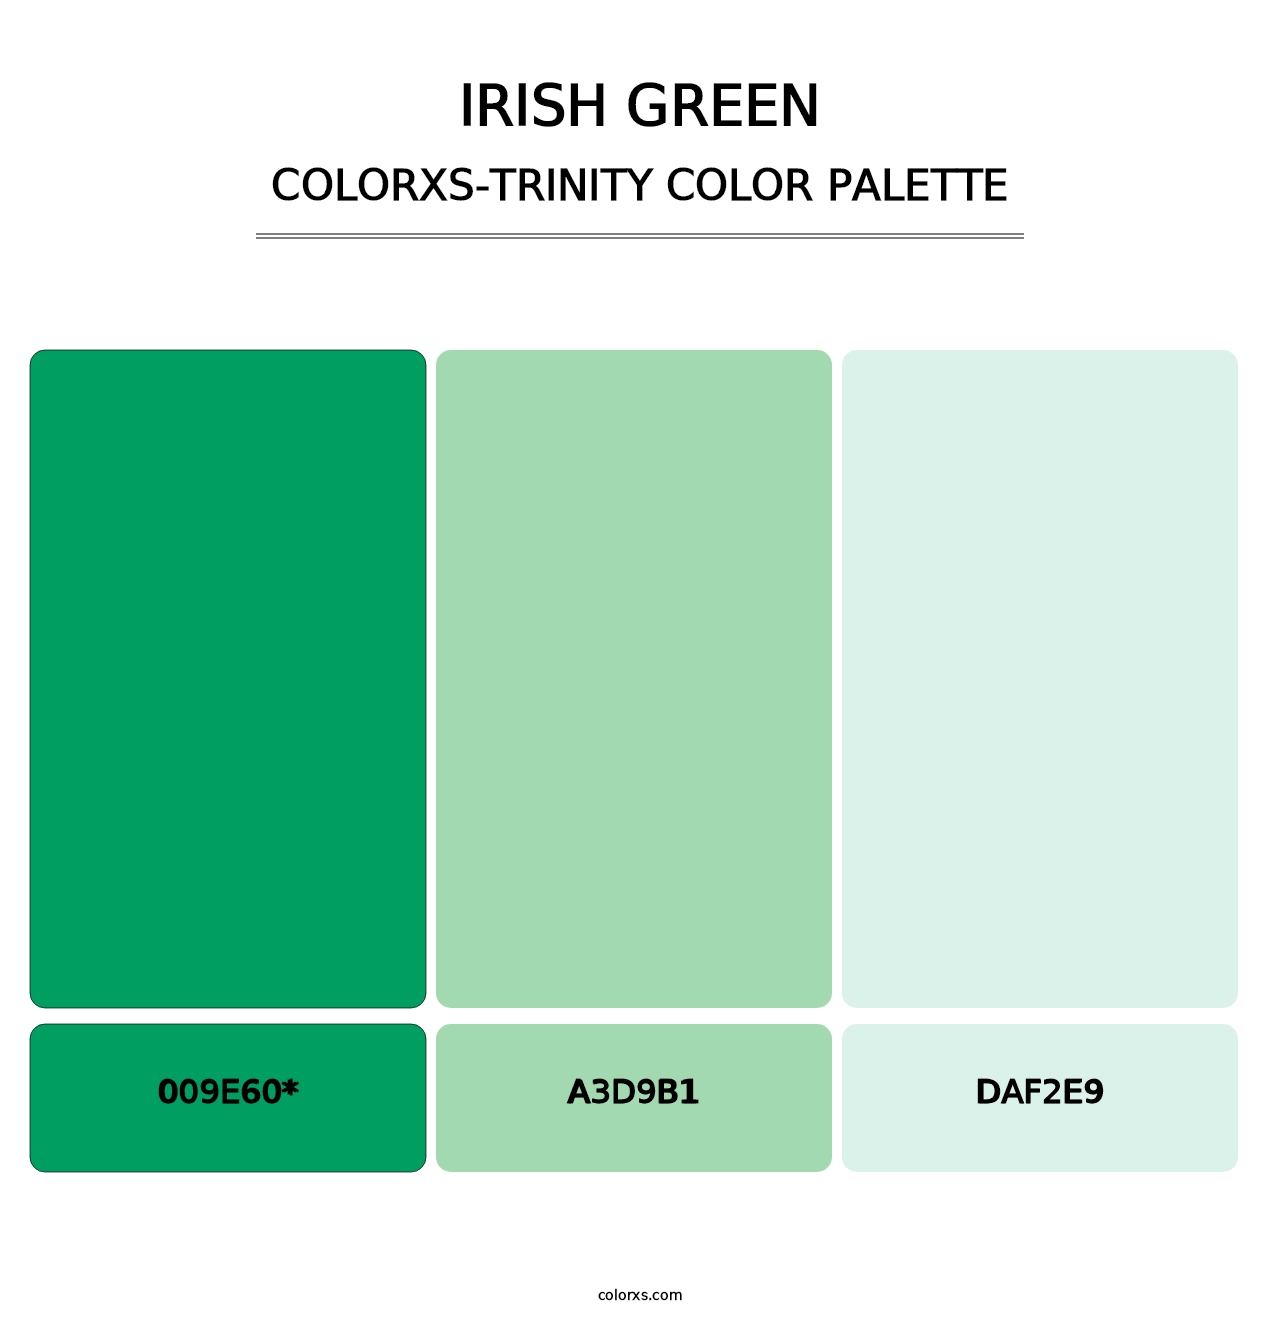 Irish Green - Colorxs Trinity Palette